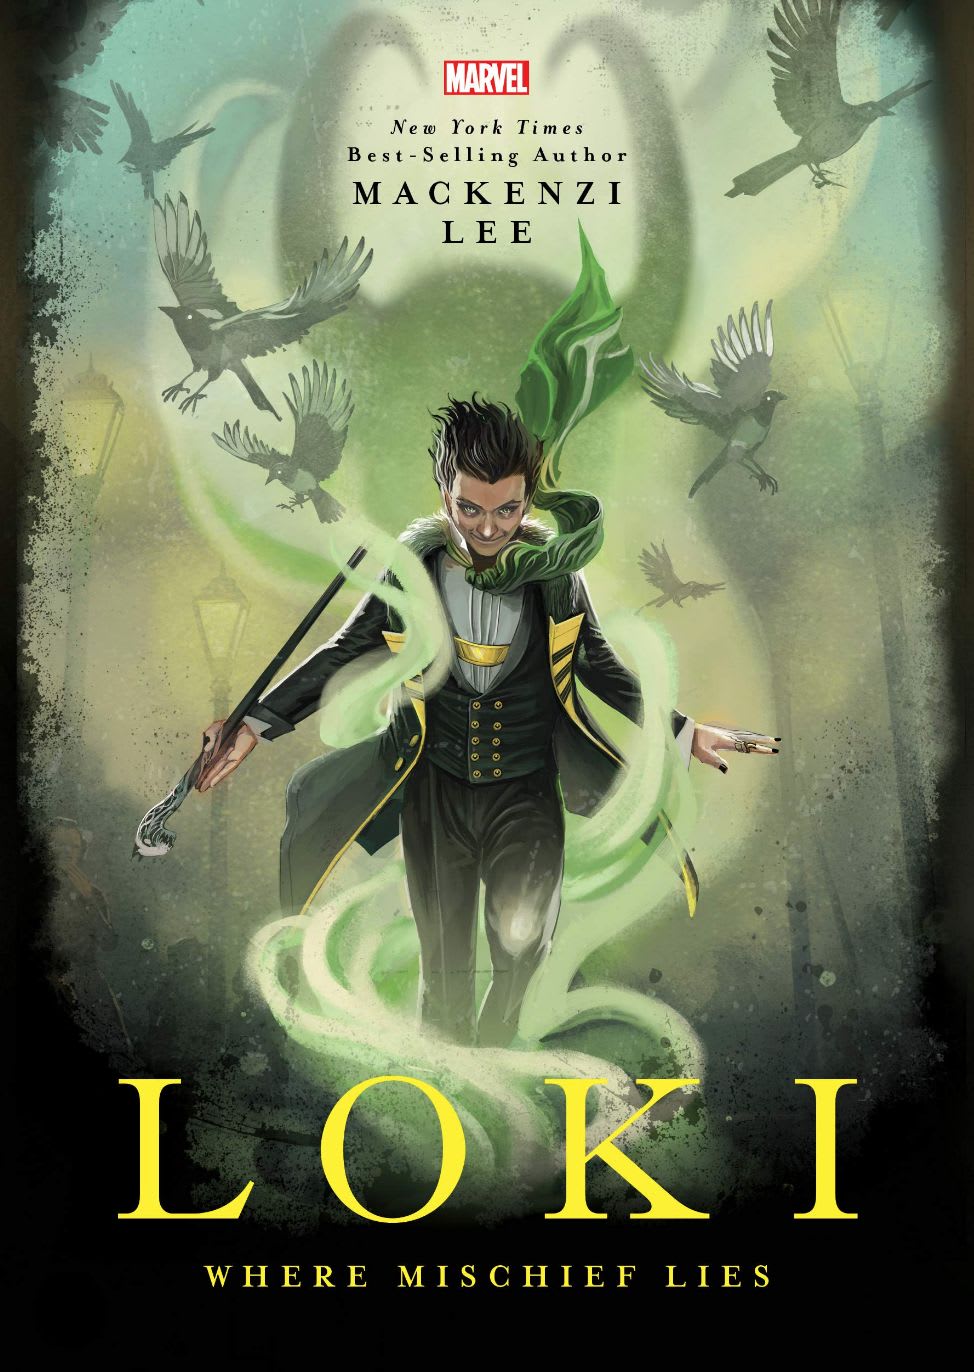 Discover Marvel Press's 'Loki: Where Mischief Lies' on Amazon.